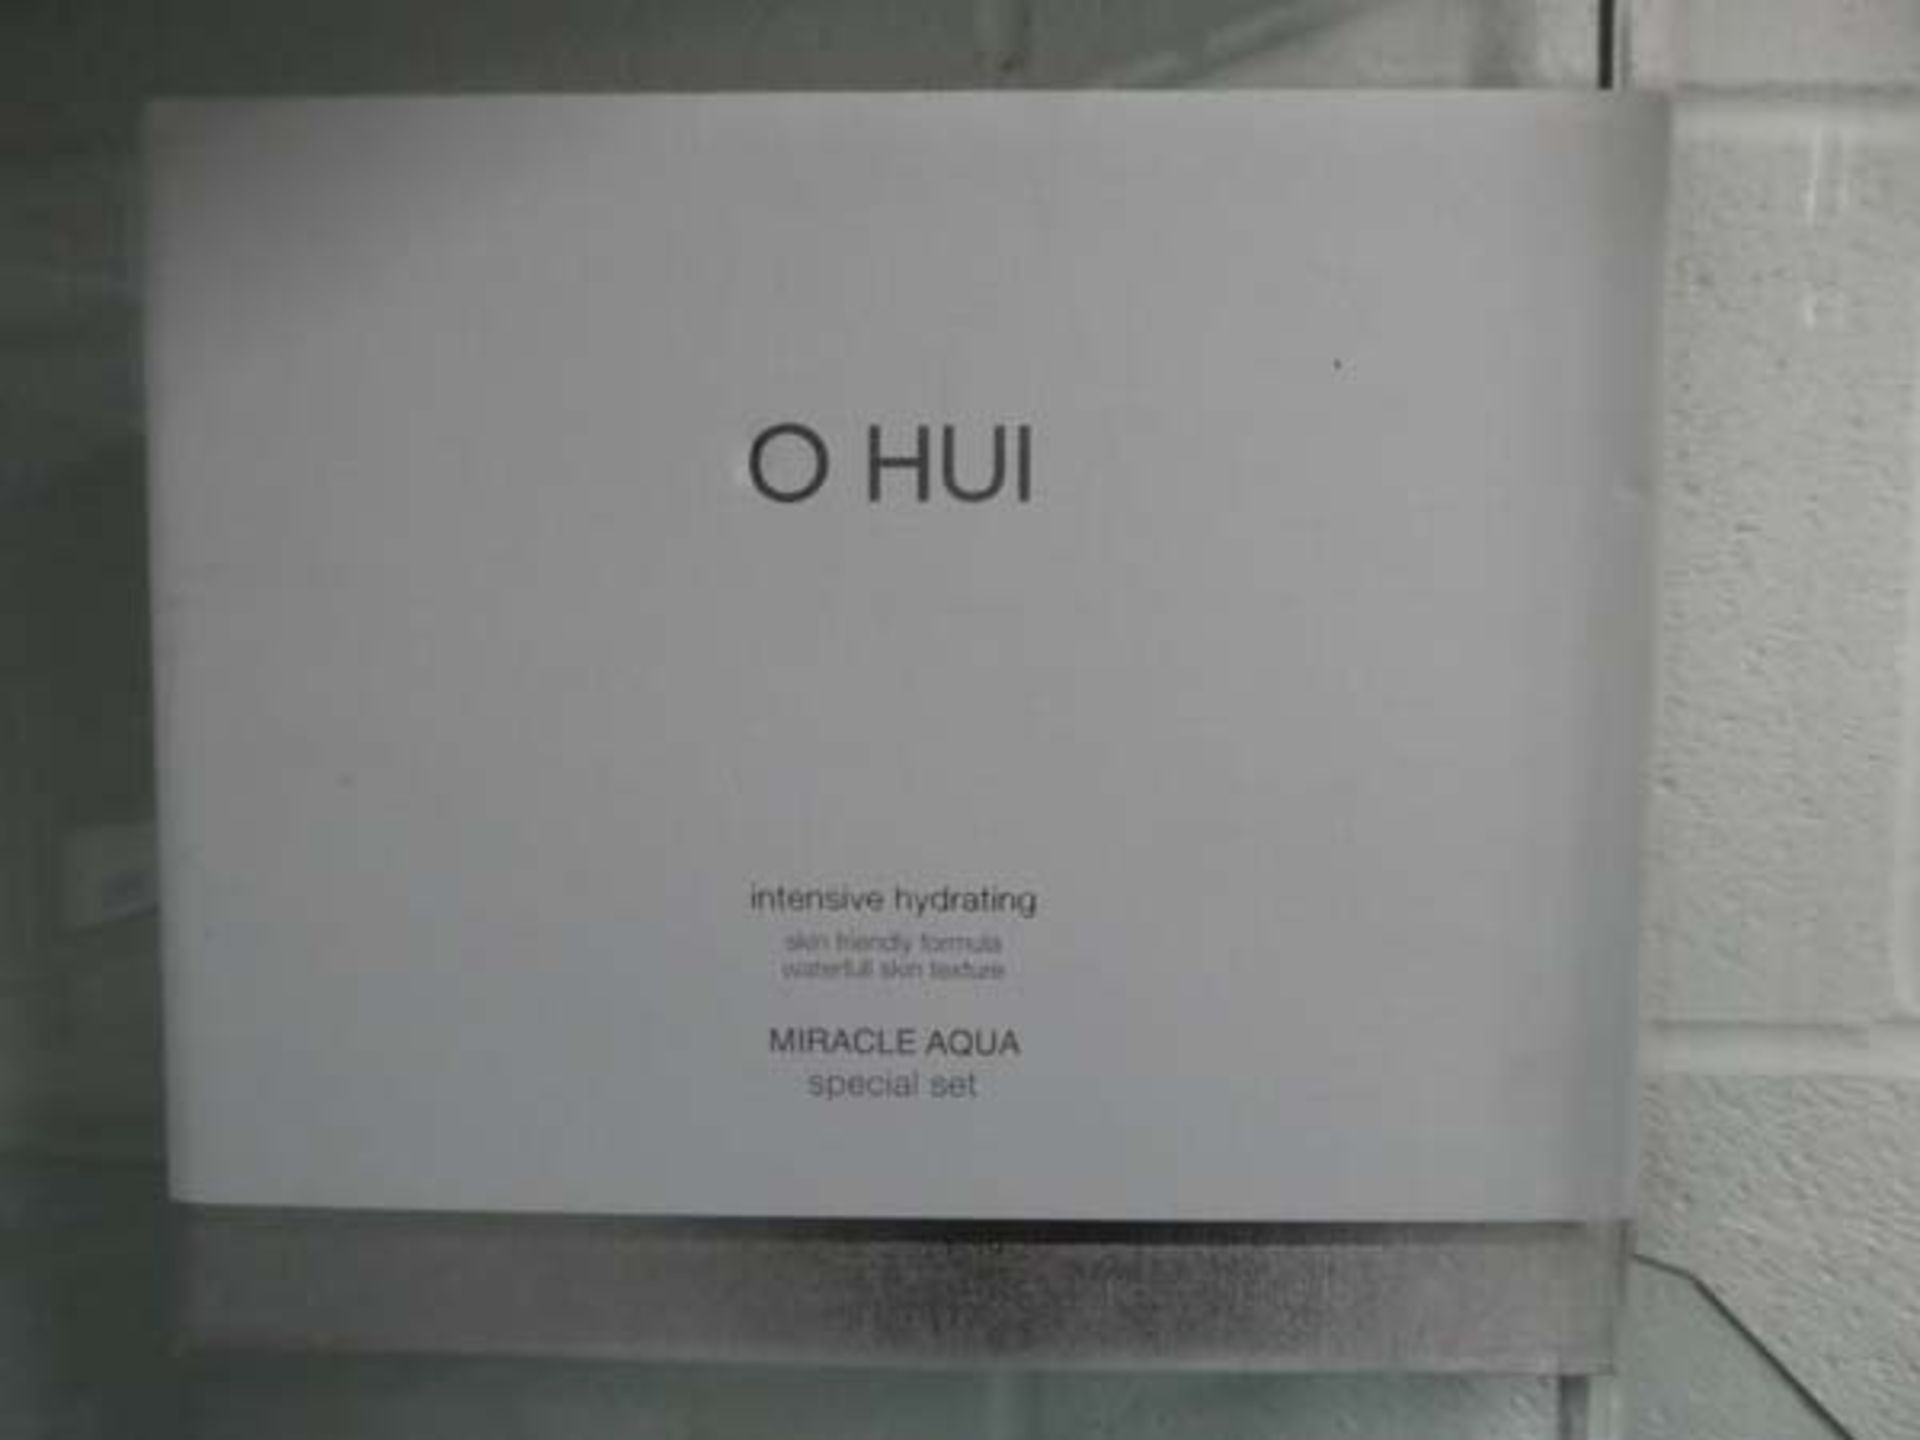 O Hui intensive hydrating skin friendly formula set with Miracle Aqua including skin softener, - Image 2 of 2